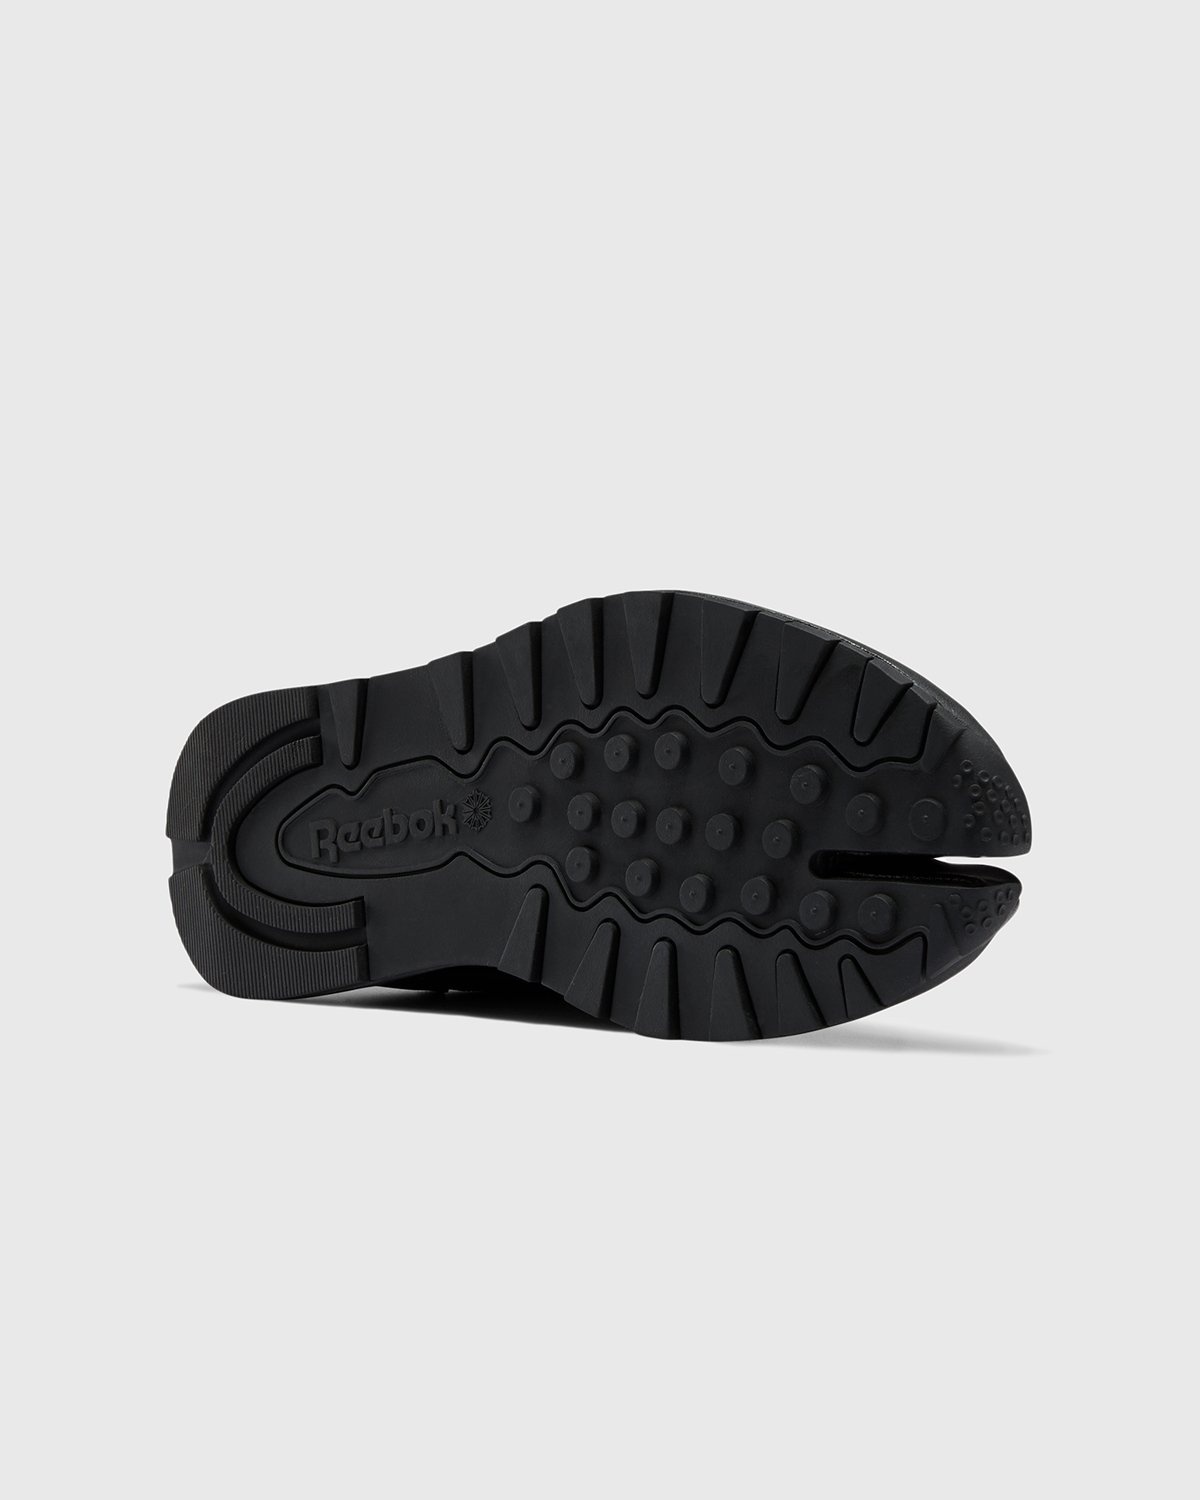 Maison Margiela x Reebok – Classic Leather Tabi Black - Low Top Sneakers - Black - Image 8